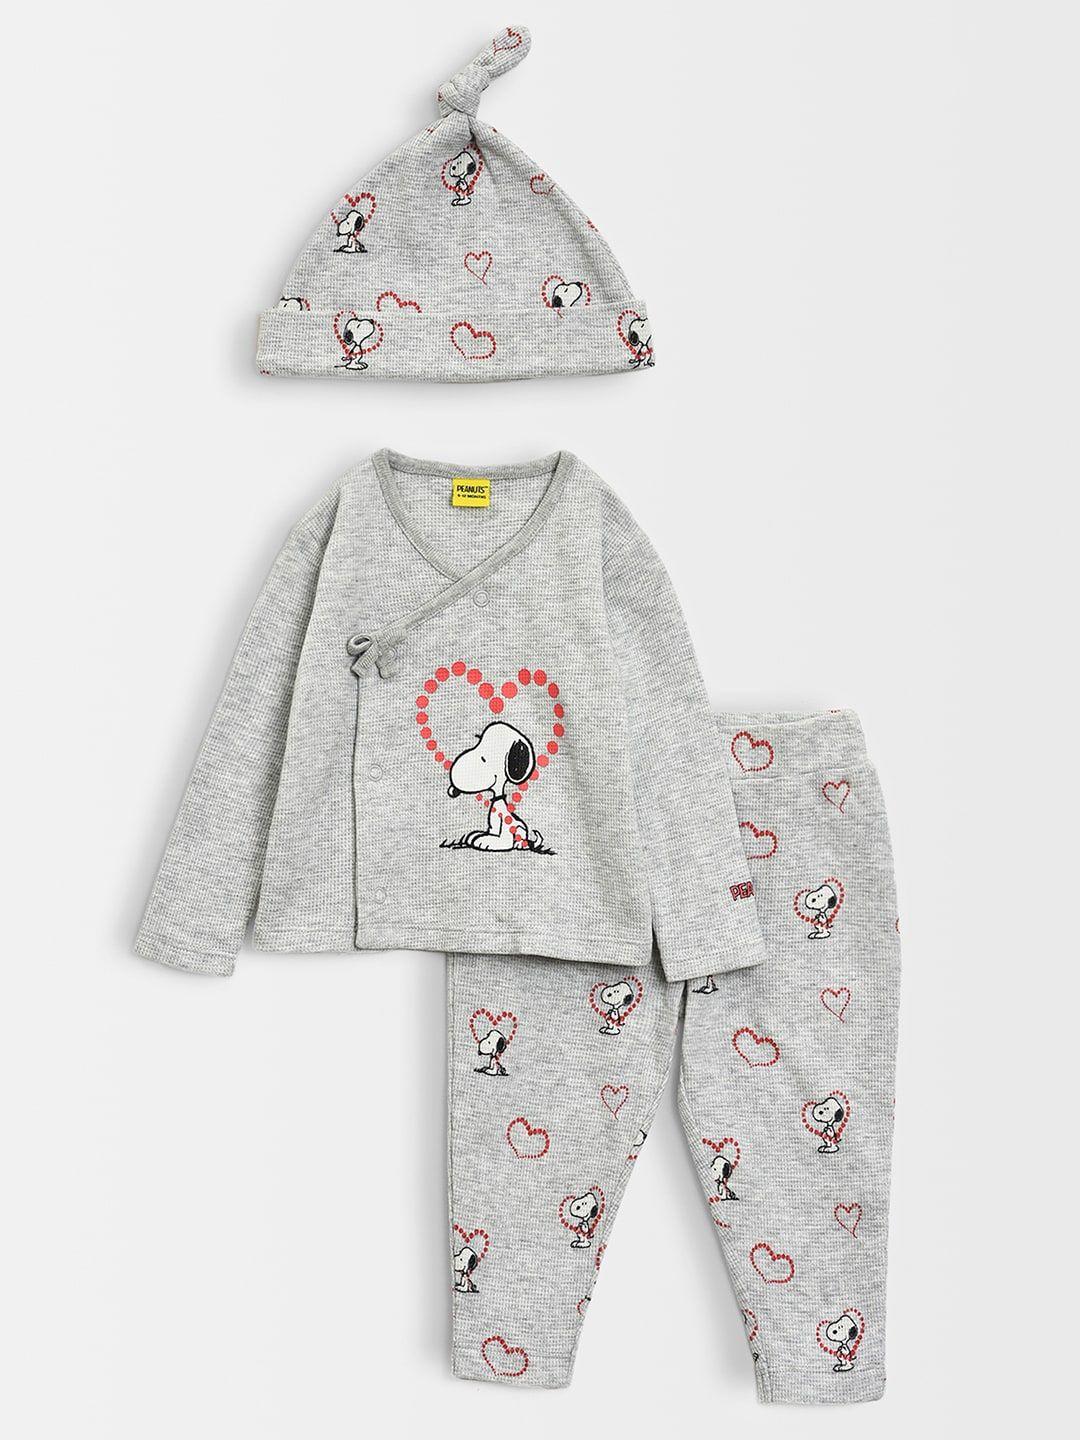 miarcus infants peanuts printed cotton top with pyjamas and cap